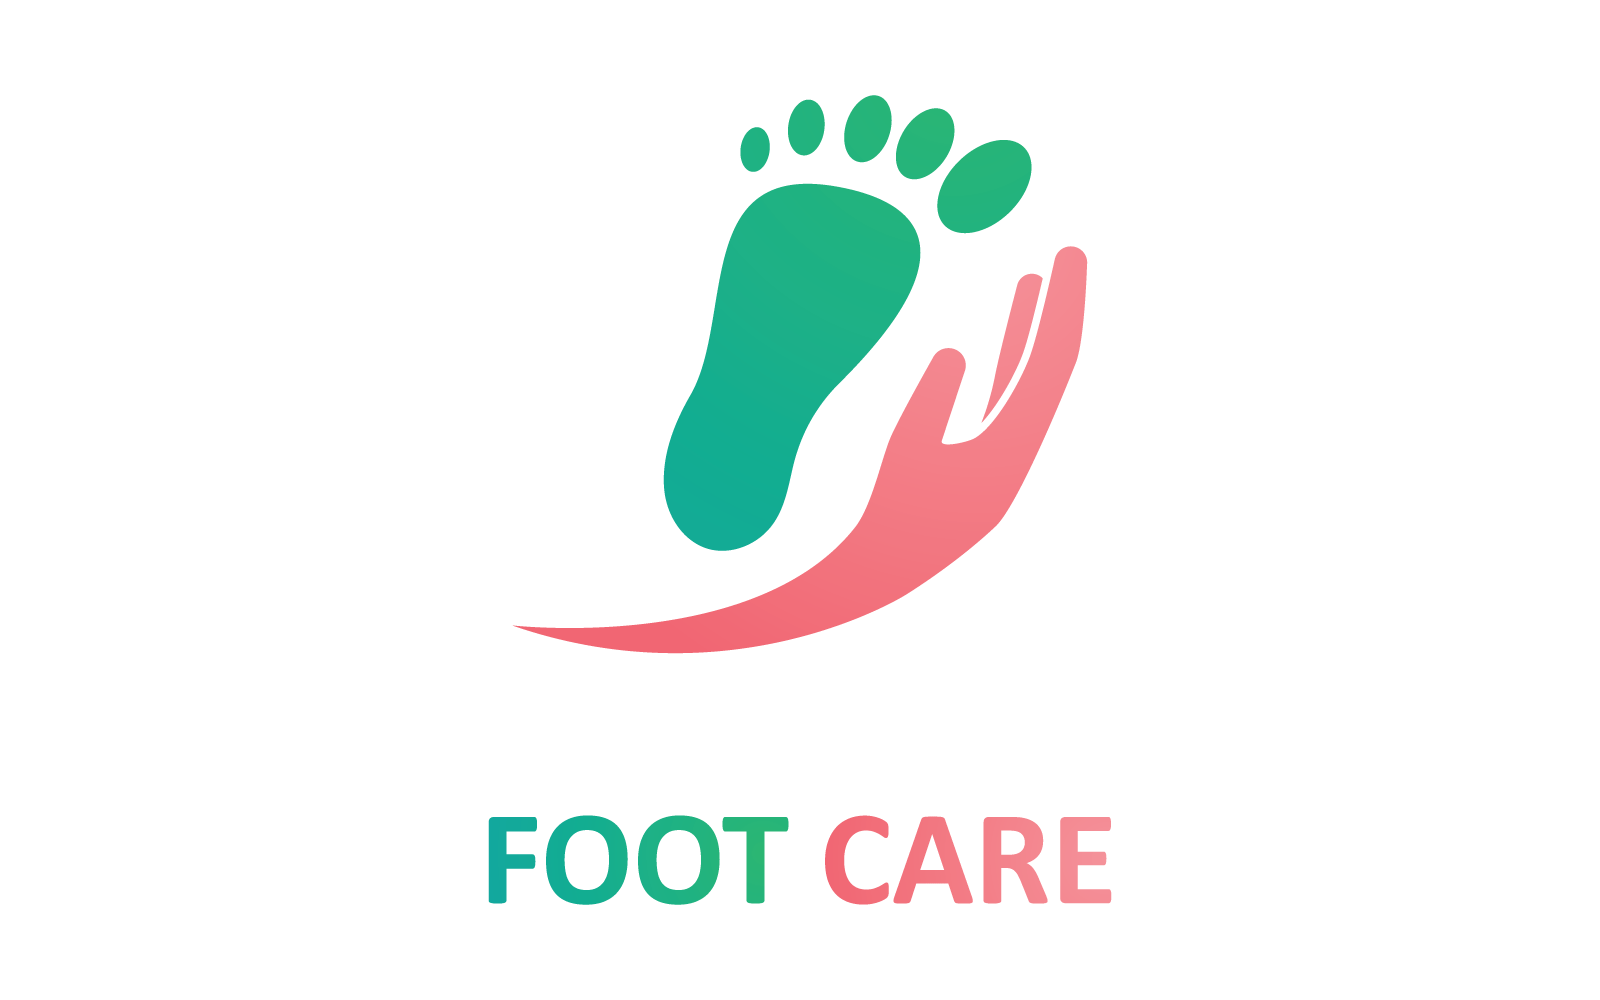 Foot care illustration logo icon flat design